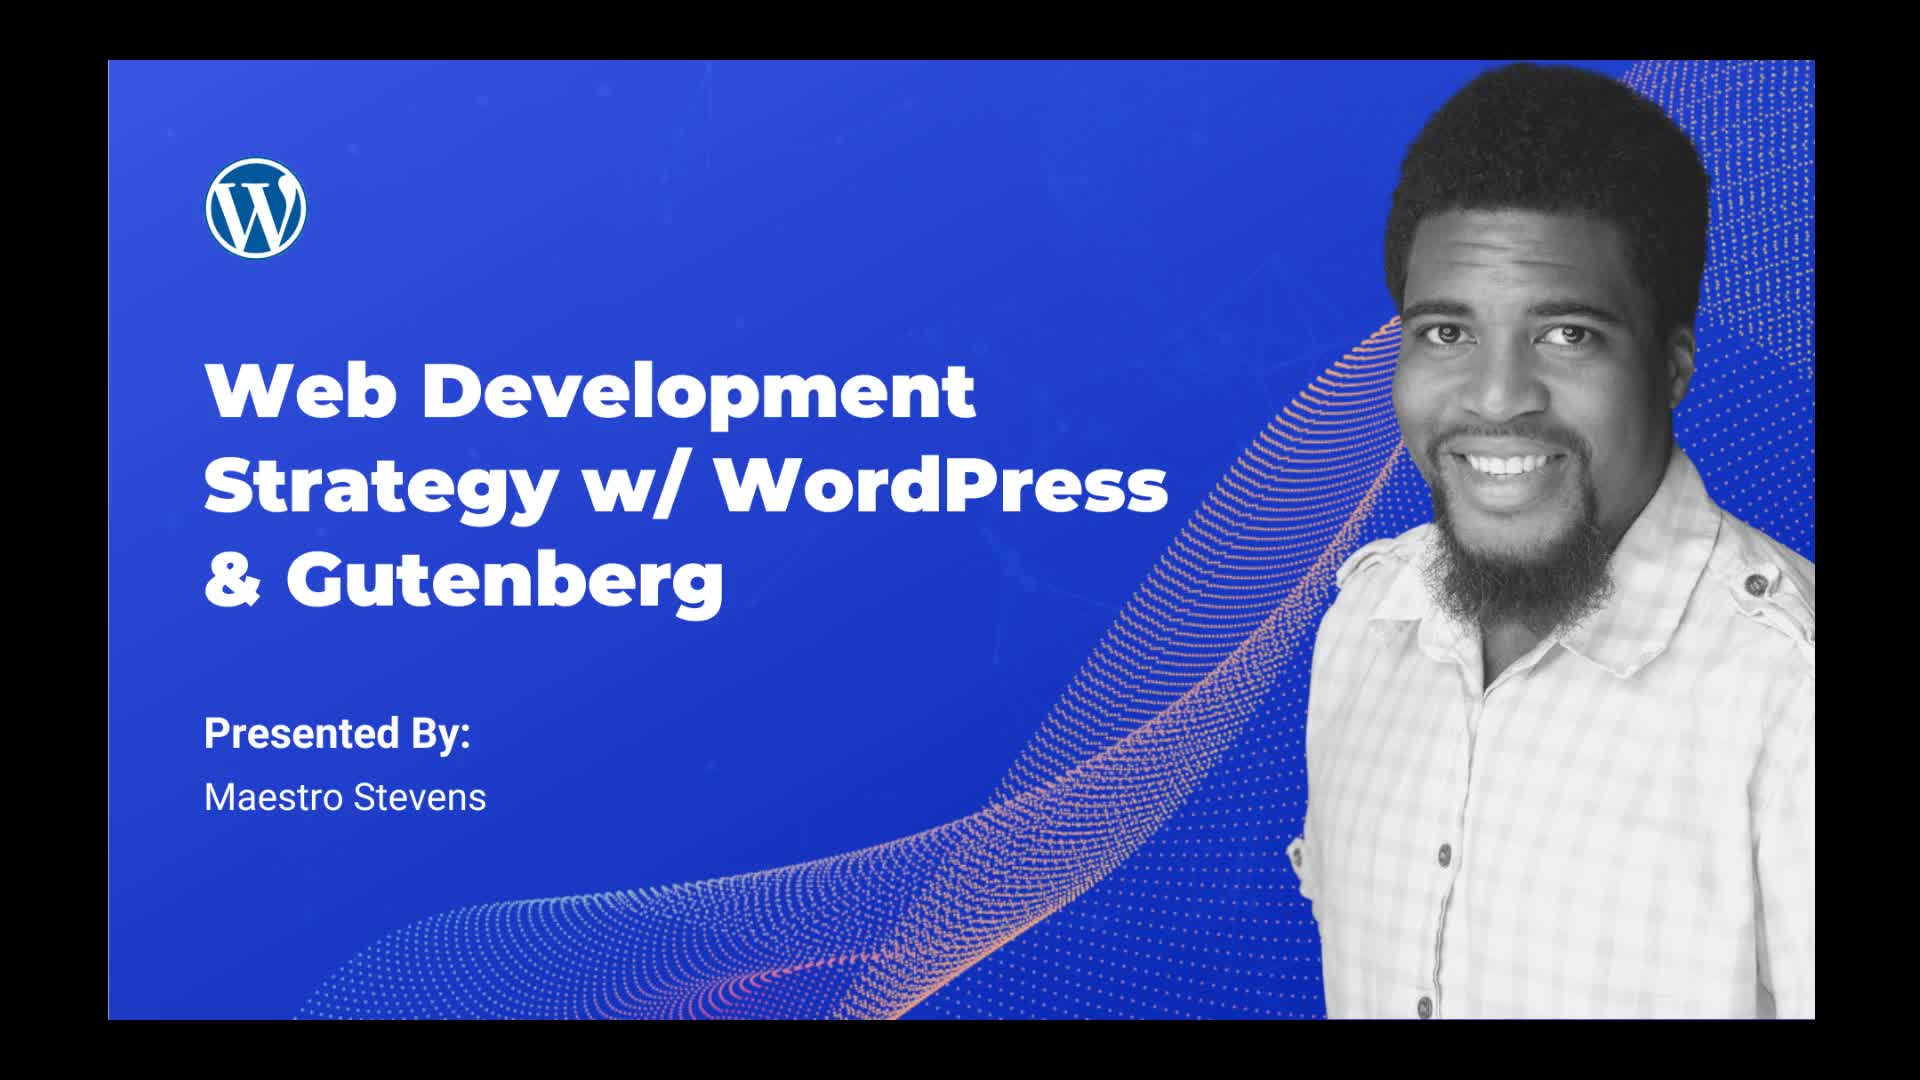 Web development strategy with WordPress and Gutenberg